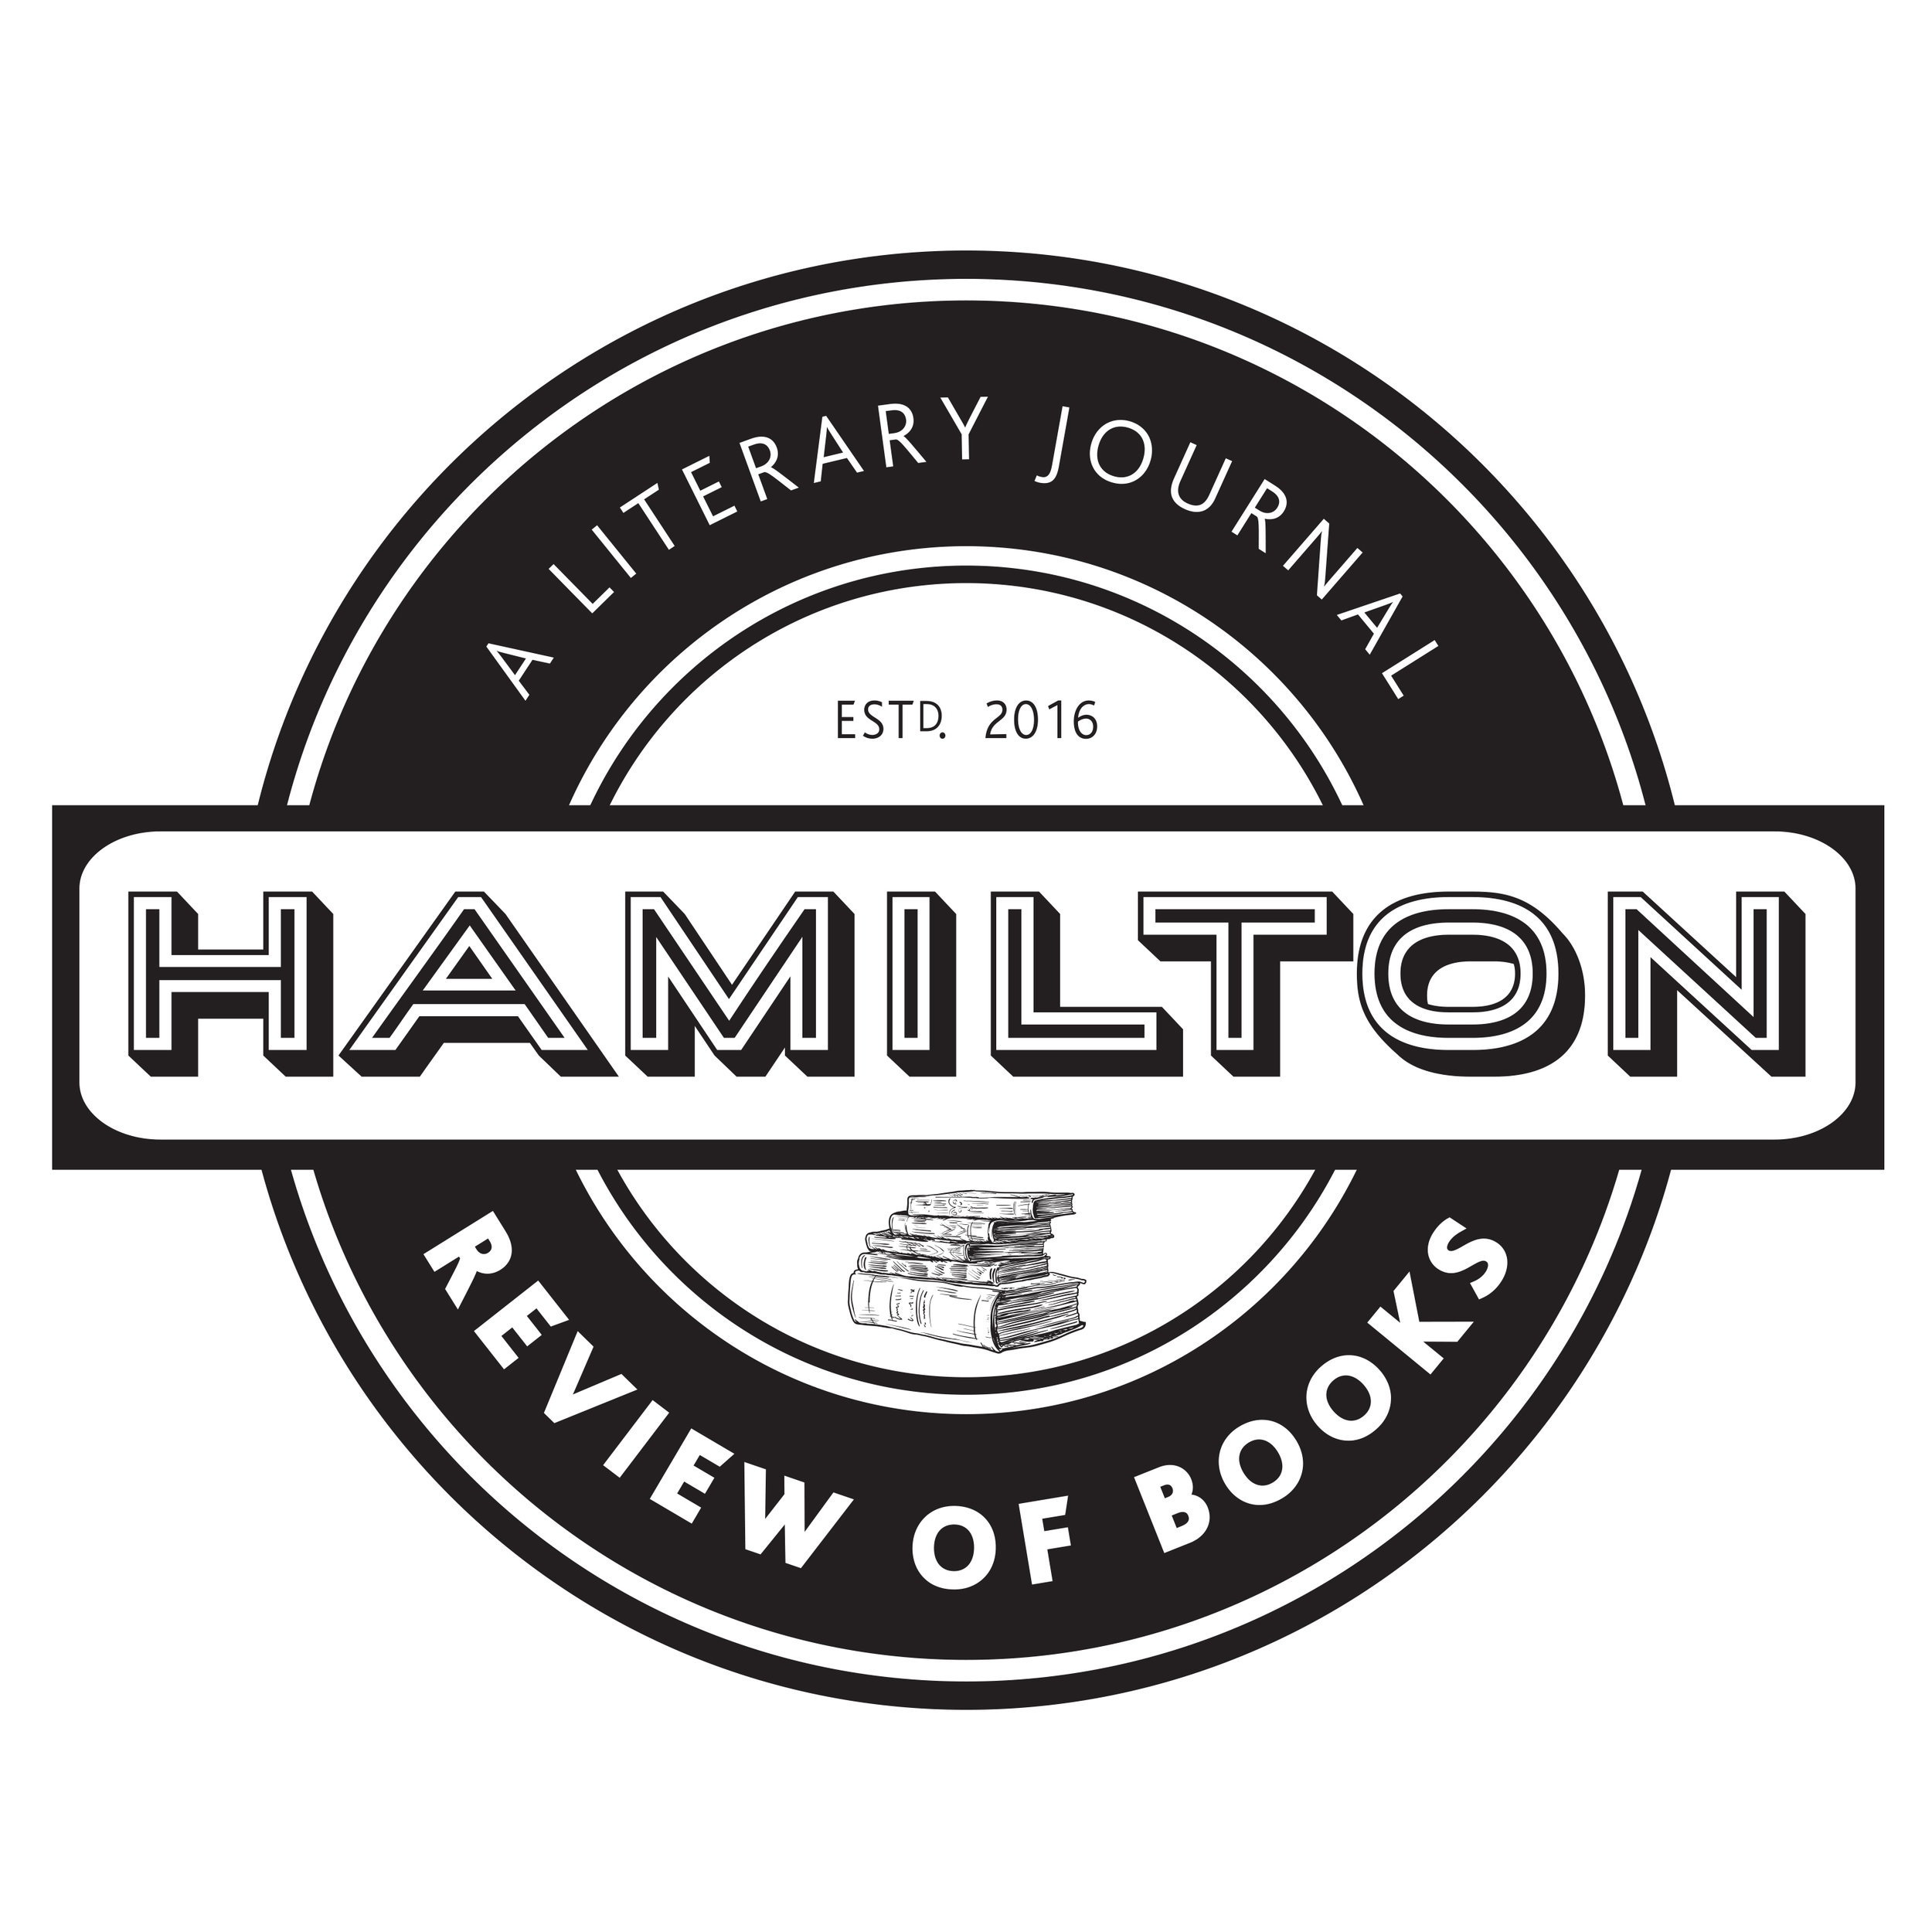 Hamilton Review of Books